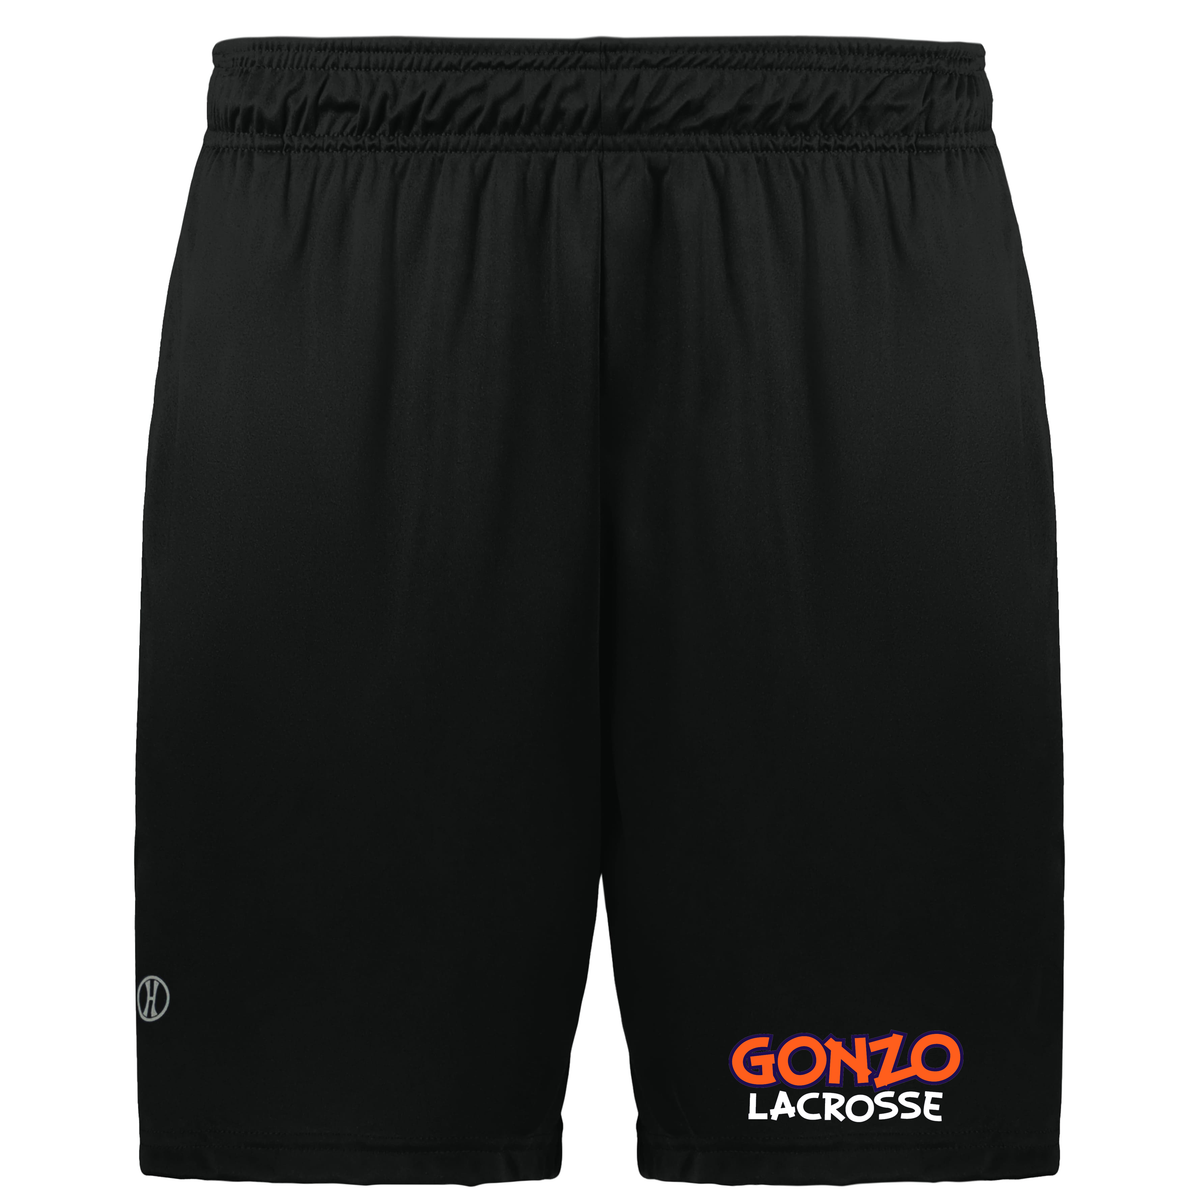 Gonzo Lacrosse Momentum Shorts